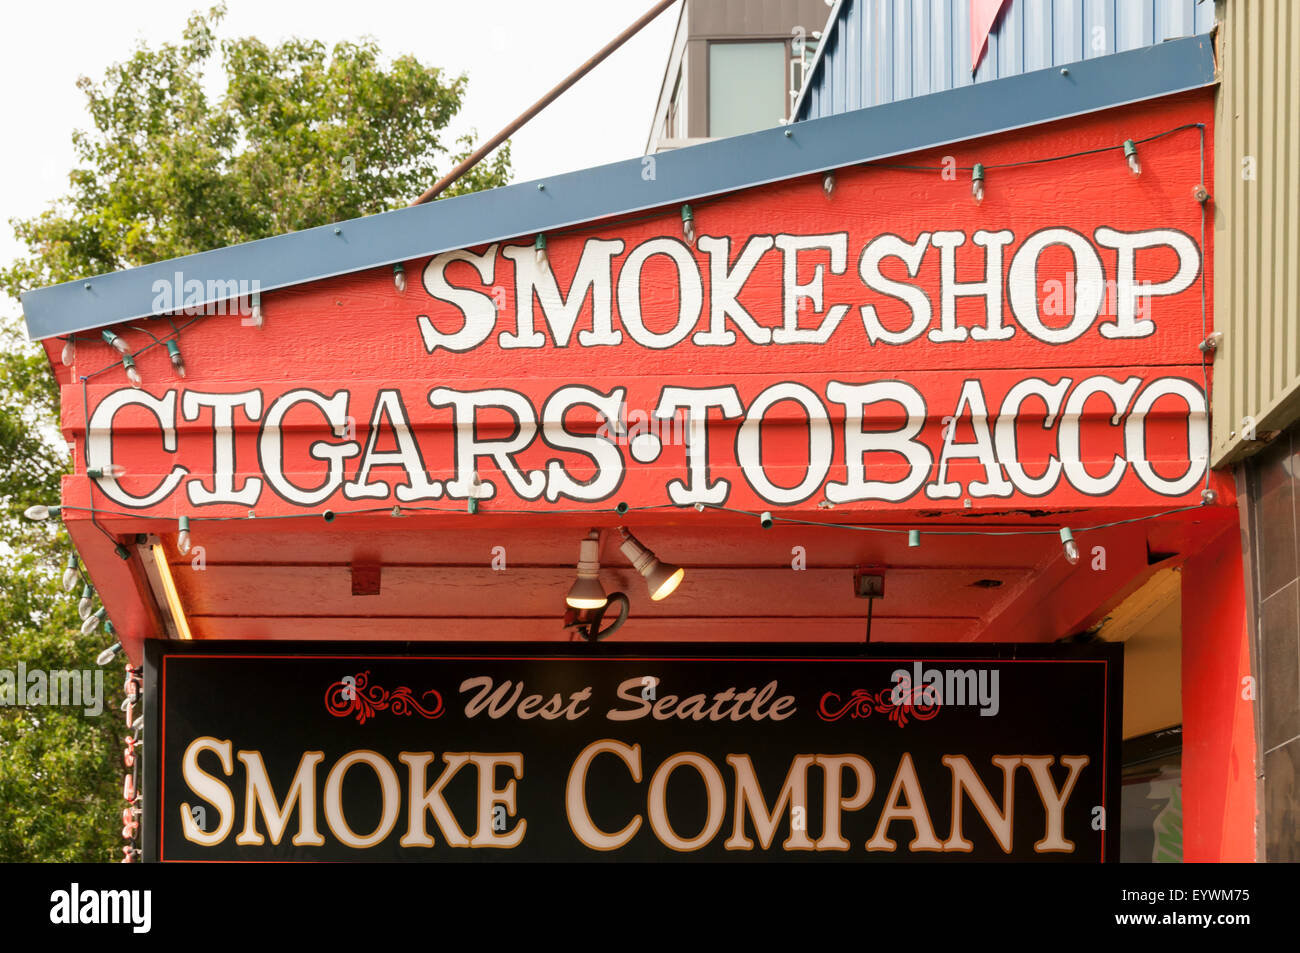 The West Seattle Smoke Company. Stock Photo